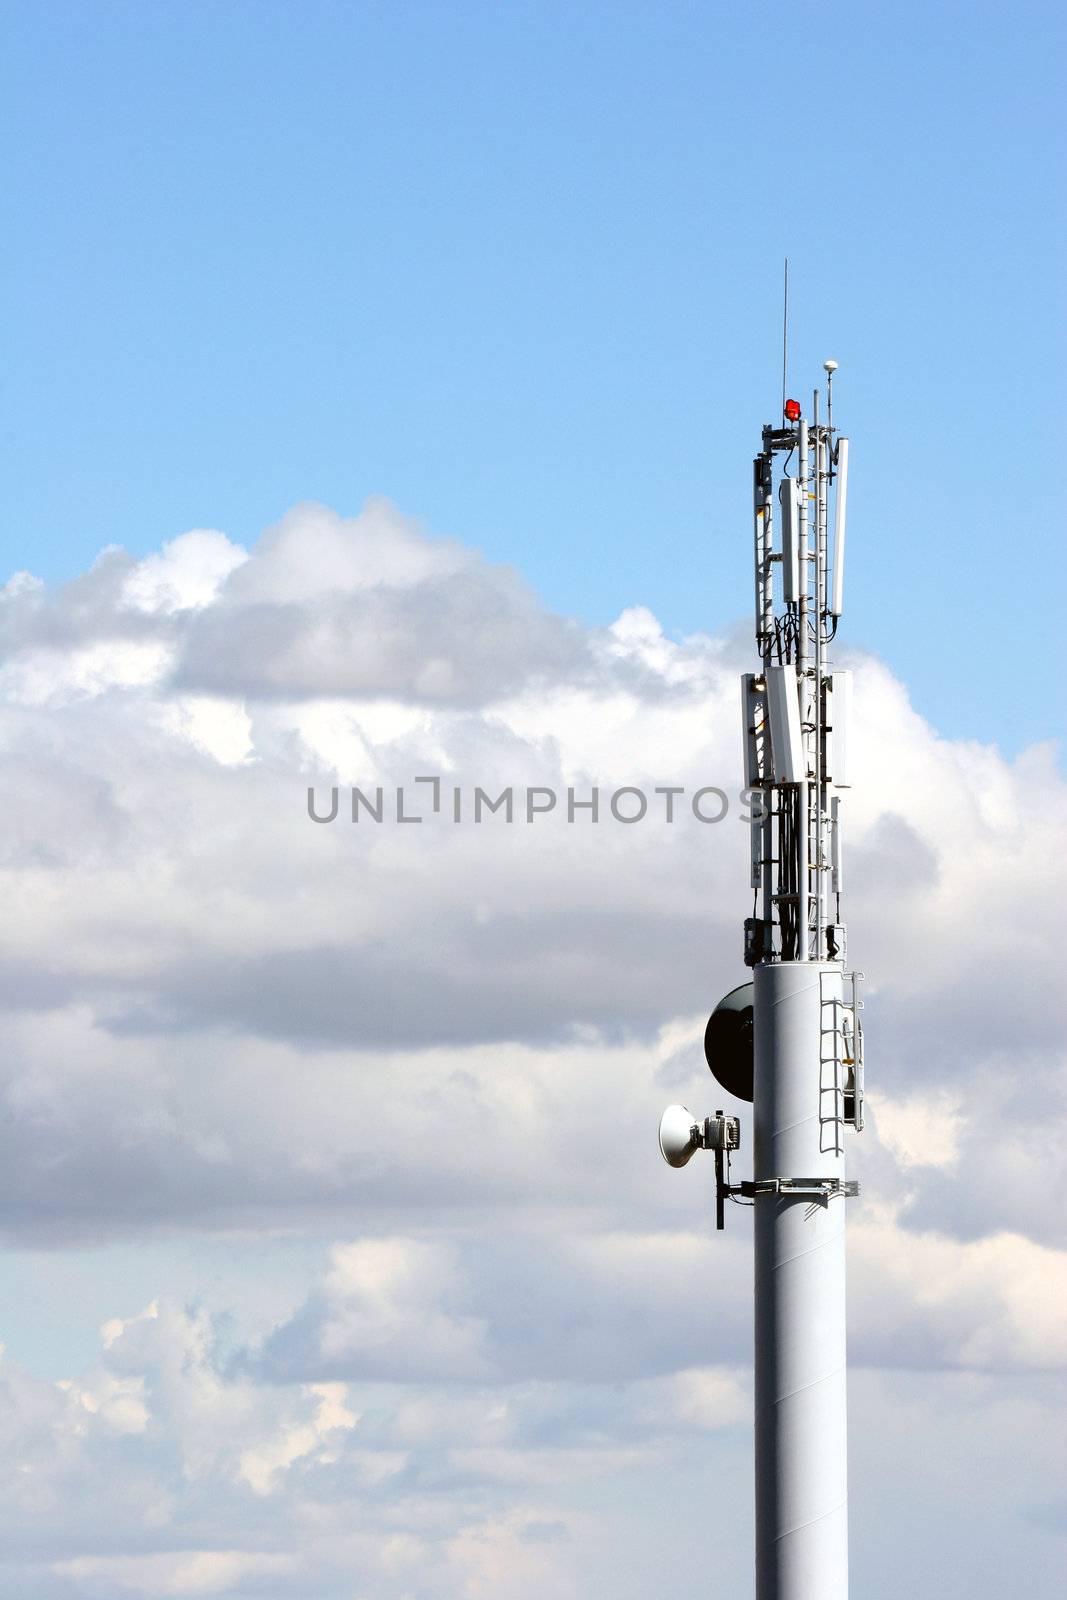 Telecomunication relay tower